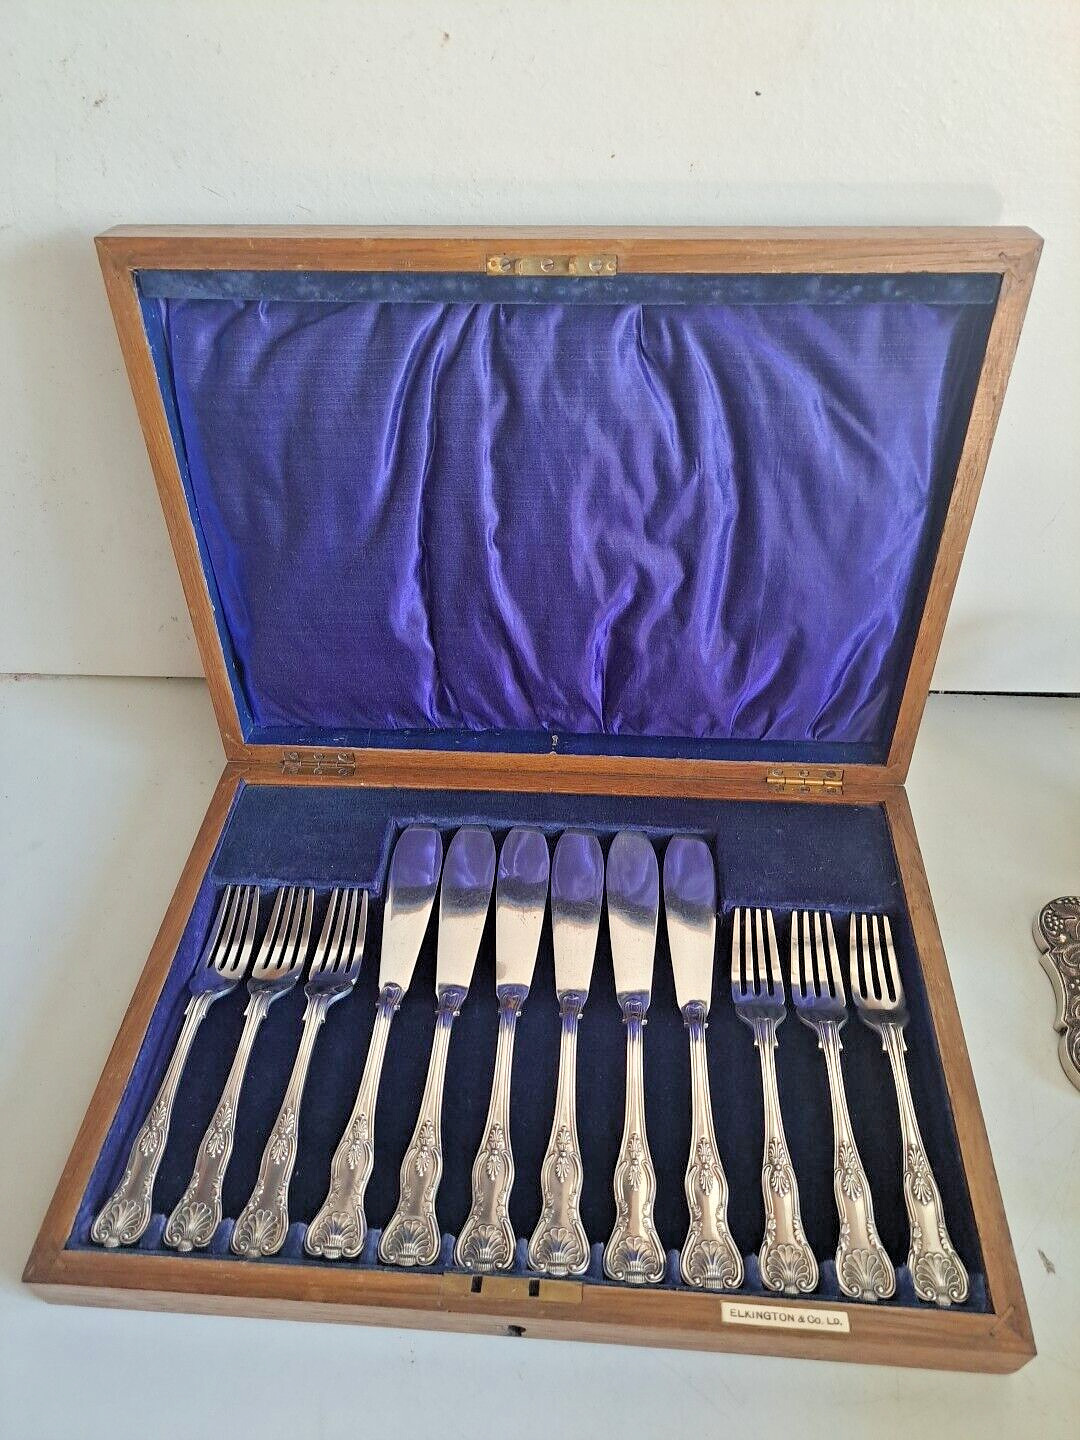 Vintage Elkington & Co Silver Plated Fish Knives And Forks Set In Wooden Case